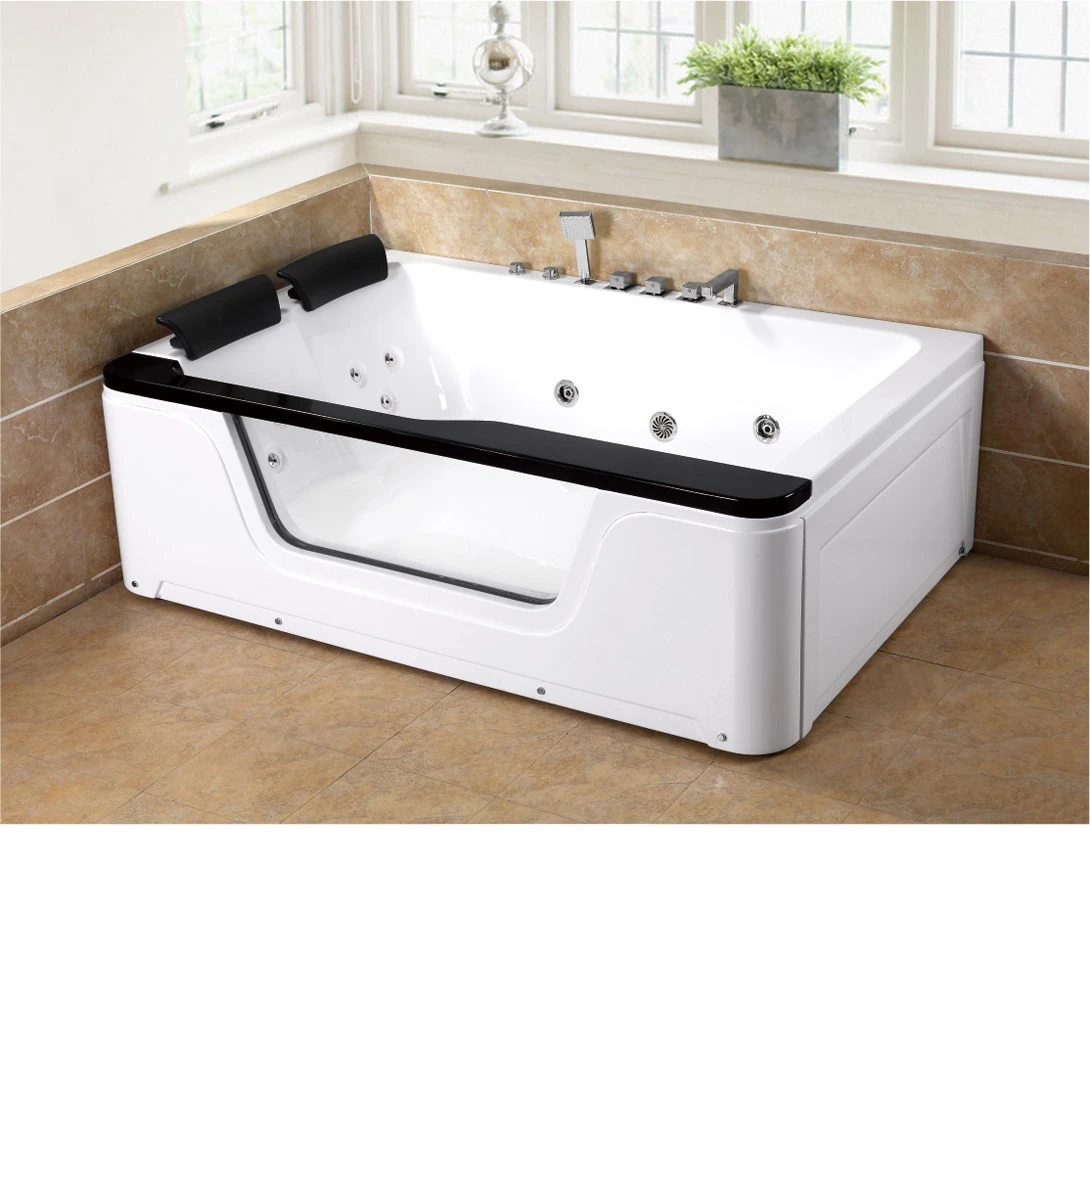 2020 China popular indoor washing machine spa massage double whirlpool bathtubs